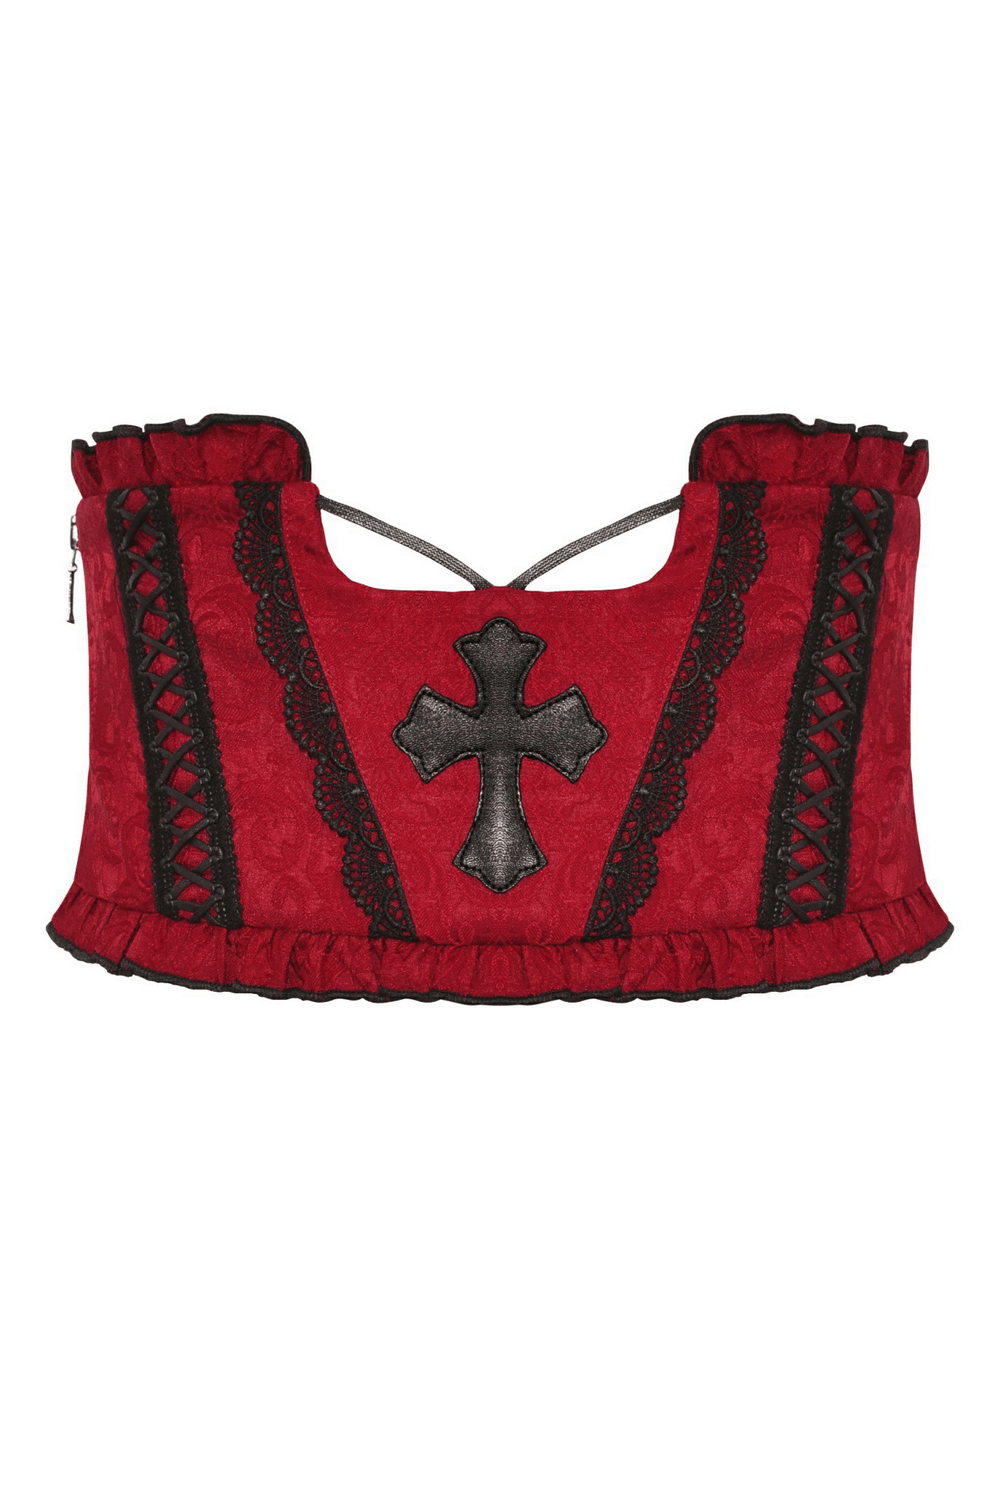 Steampunk Women's Corset Belt with Gothic Black Cross